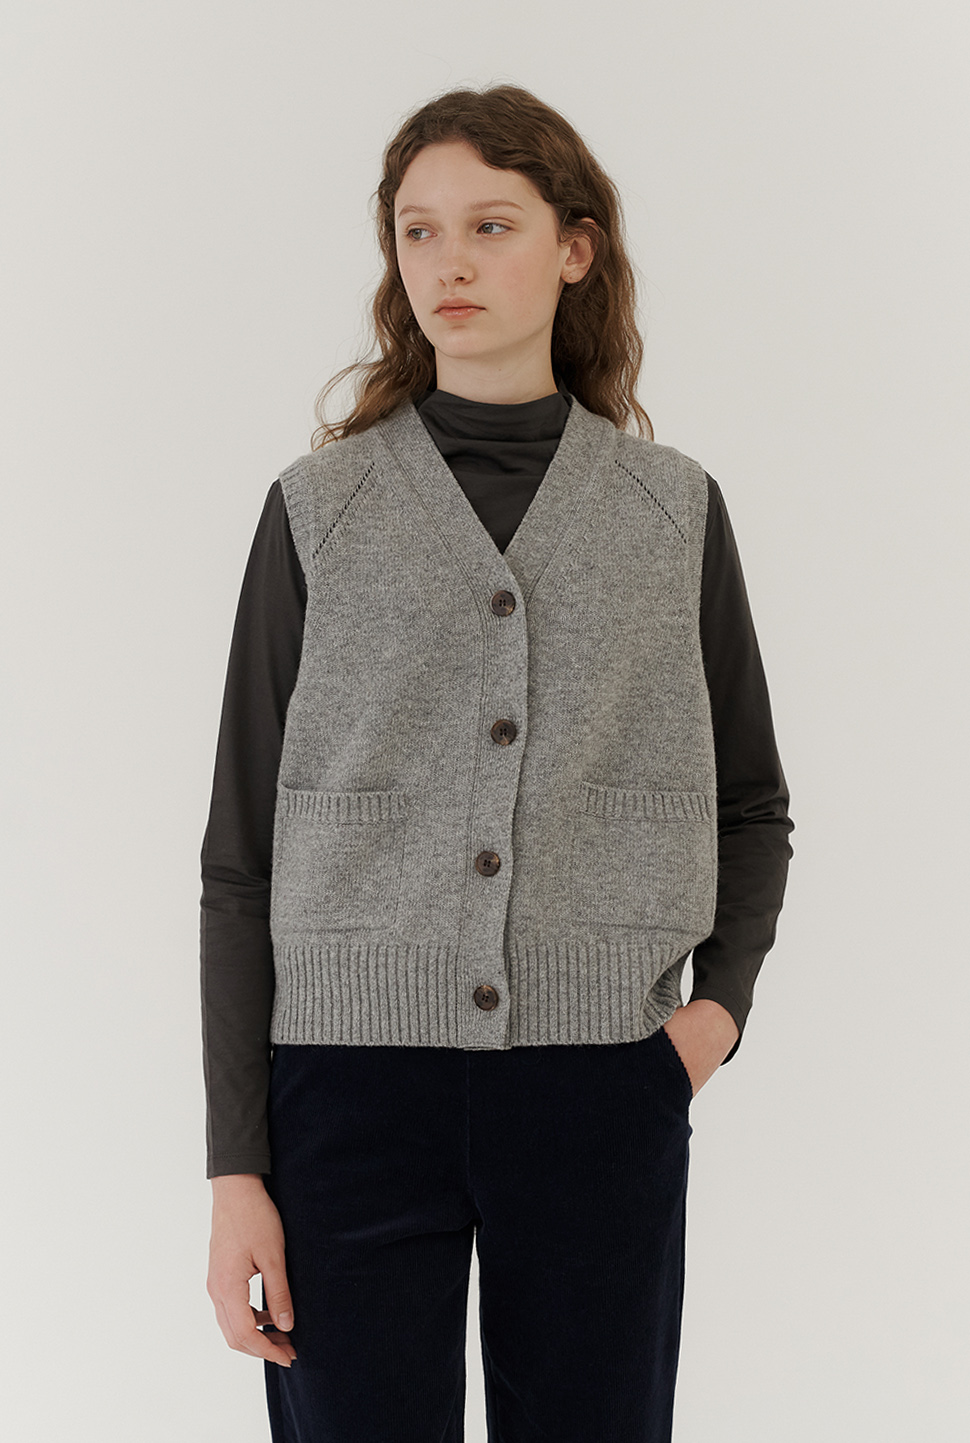 v neck wool vest-gray